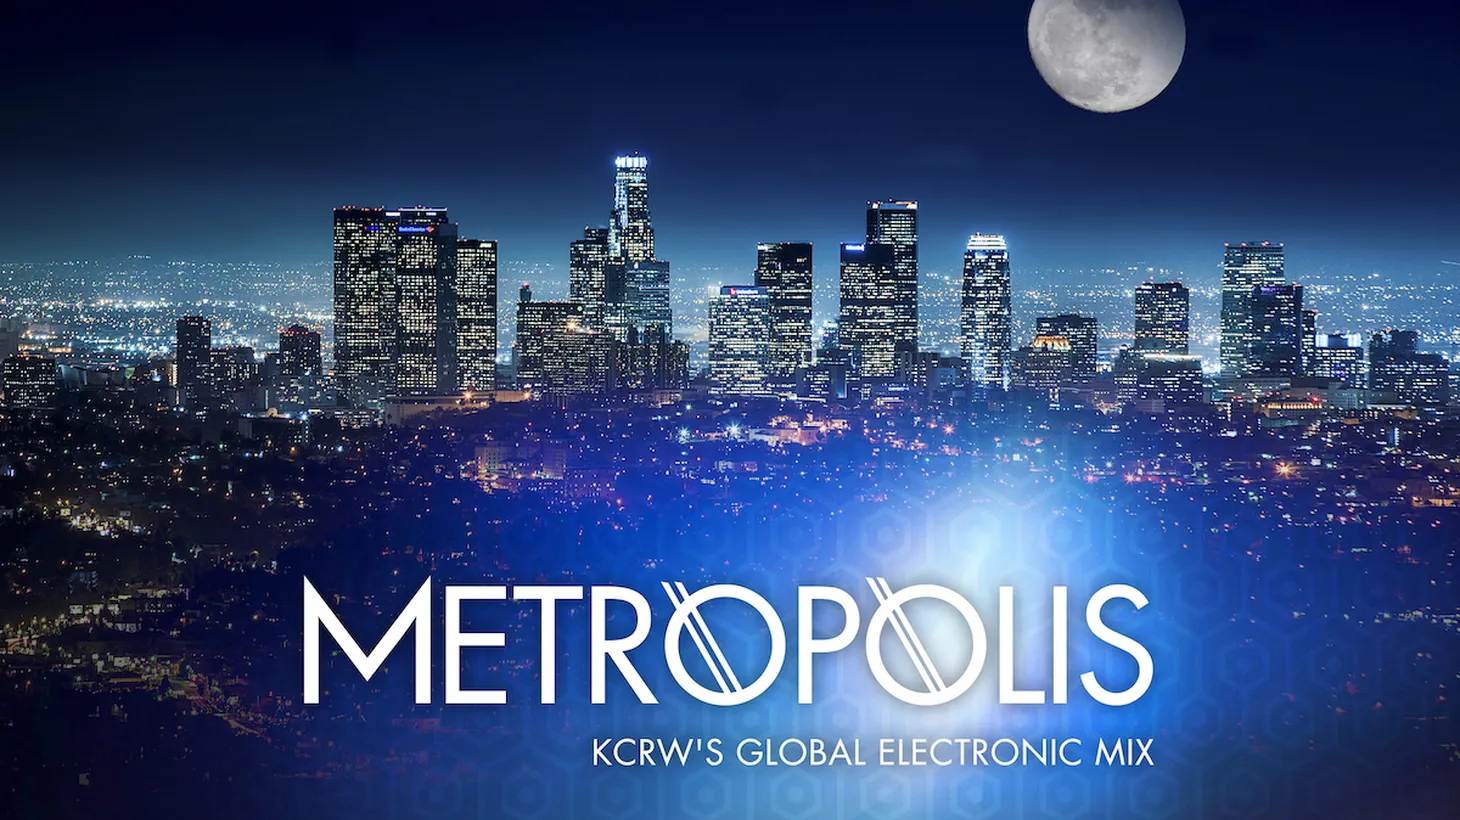 Metropolis playlist, July 23, 2022.